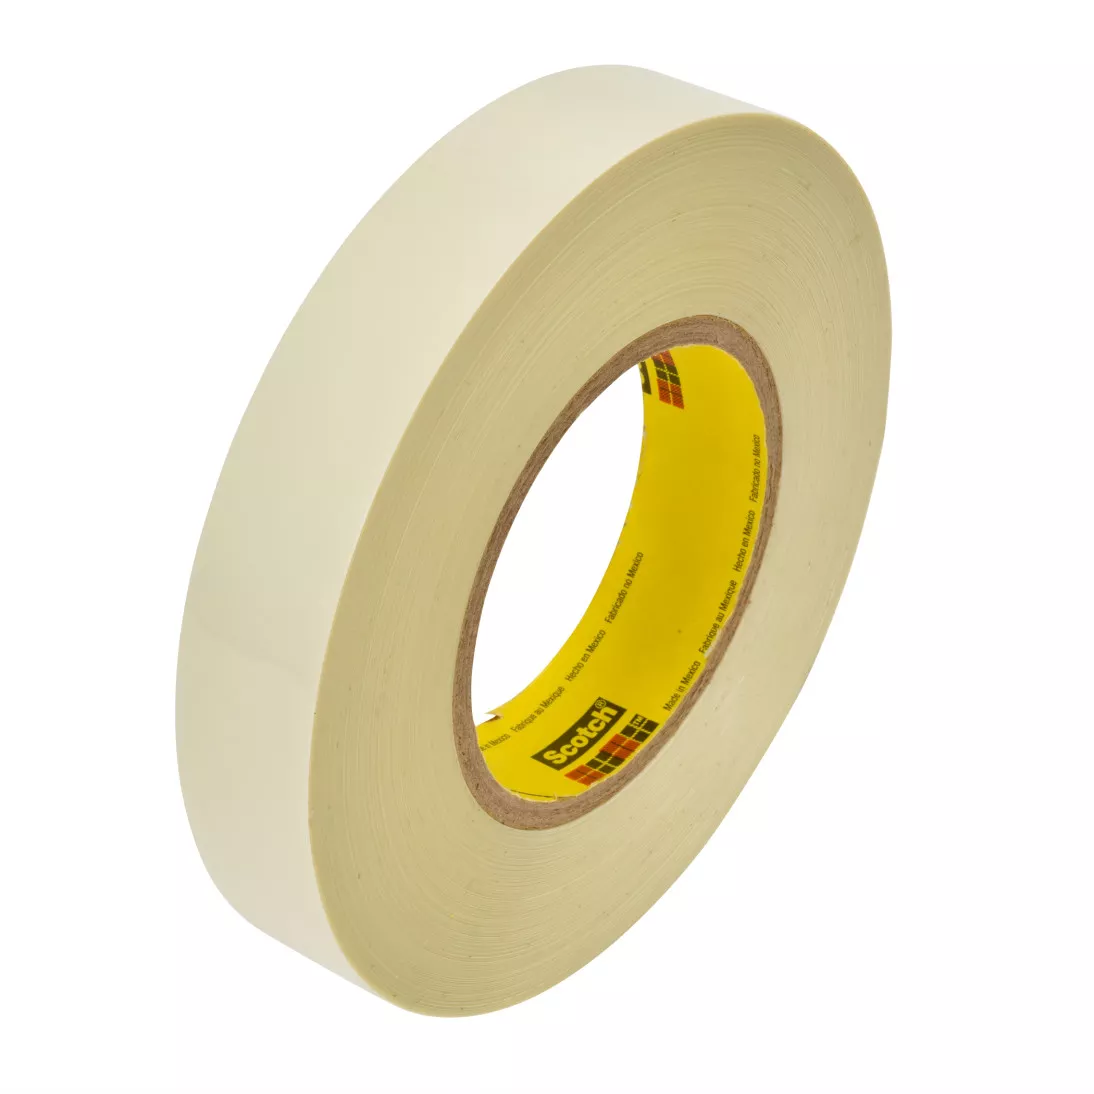 3M™ High Temperature Nylon Film Tape 8555, White, 48 in x 72 yd, 7 mil, 1 roll per case